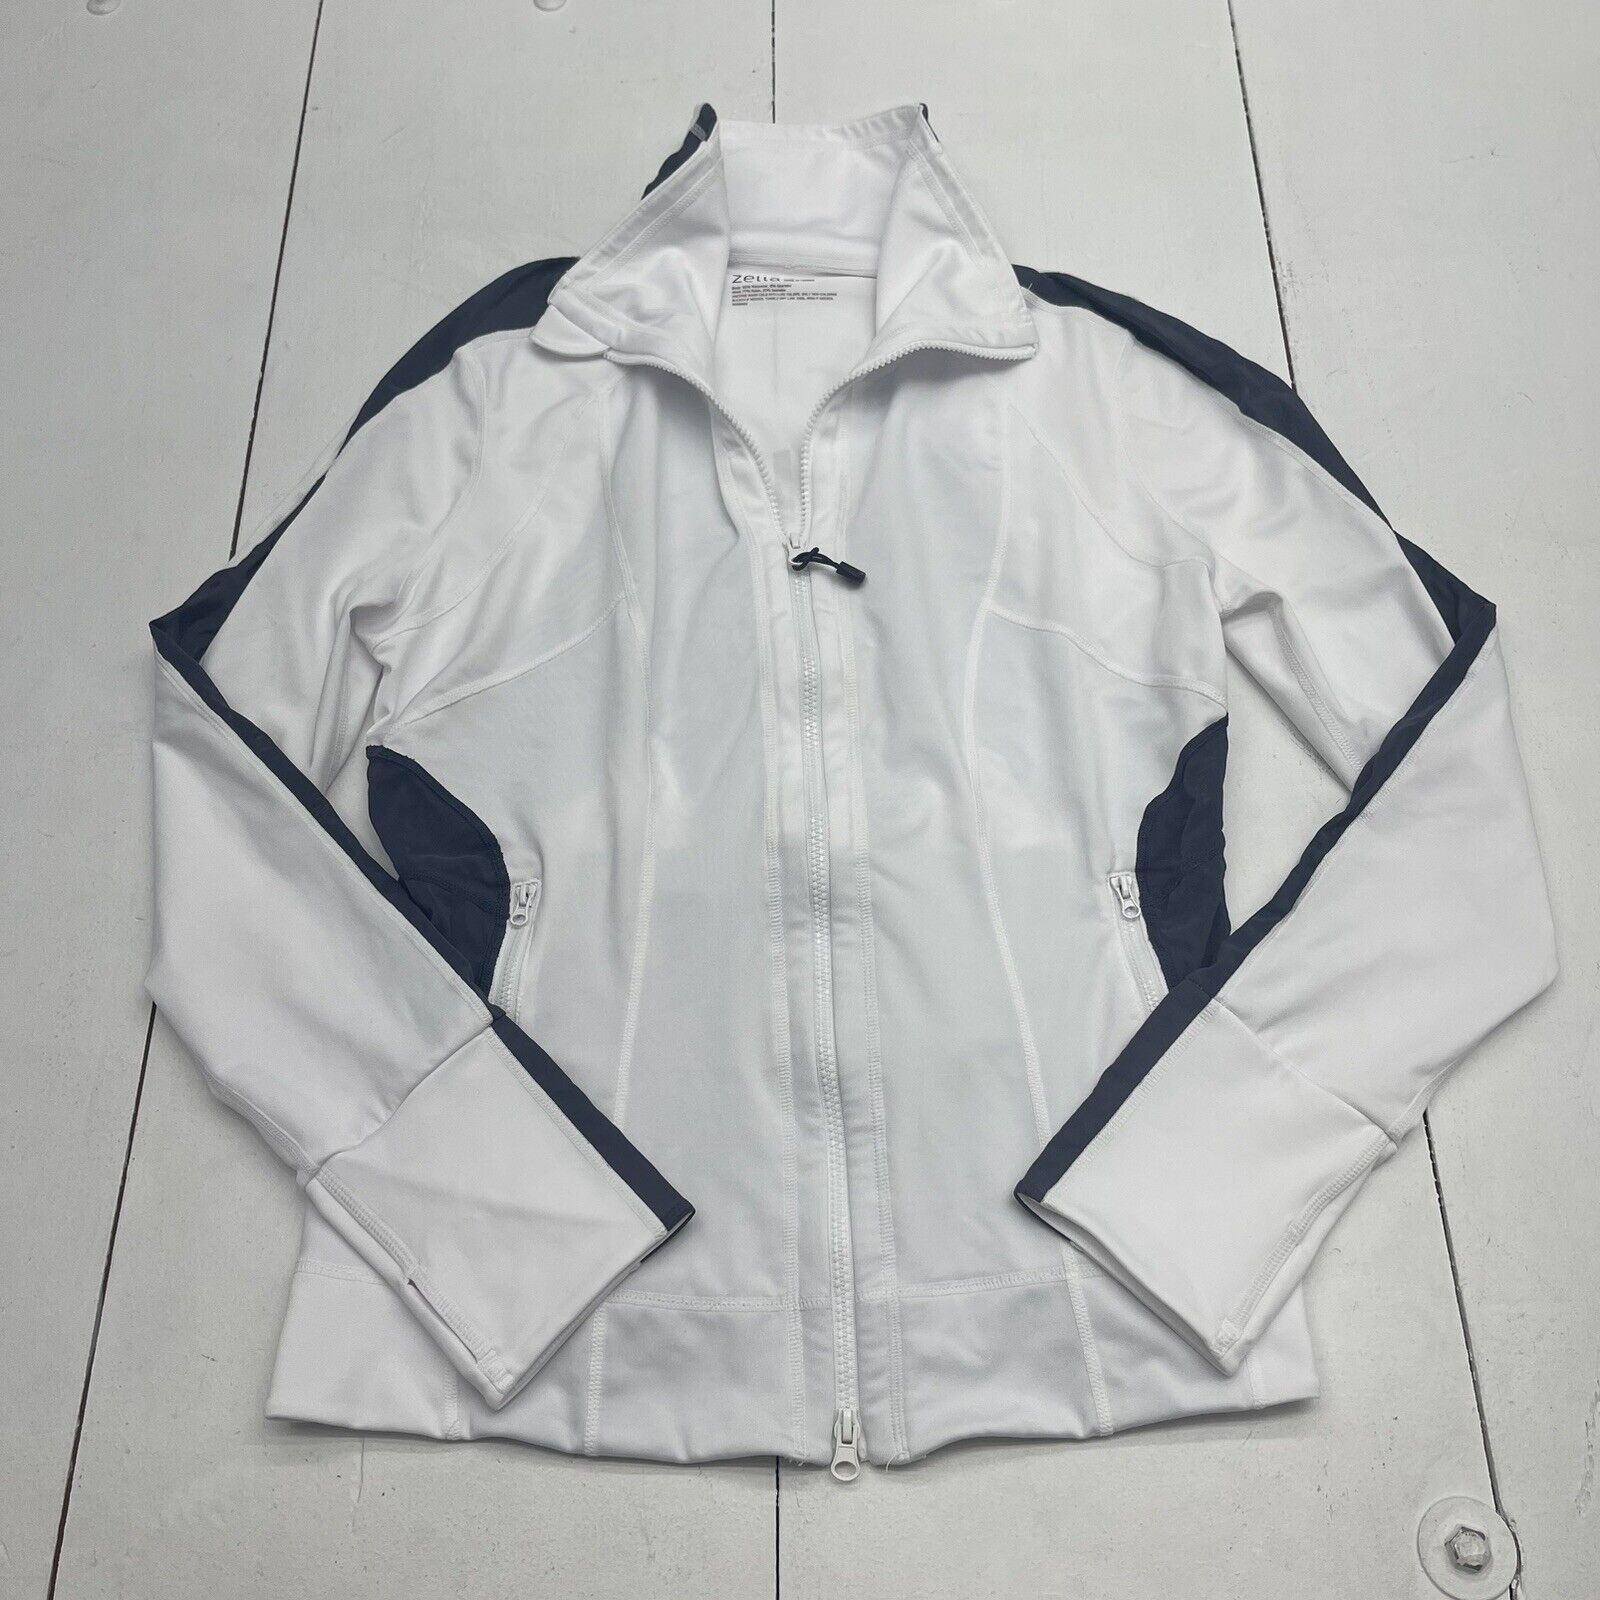 Zella White Gray Mesh Long Sleeve Zip Up Jacket Women's Size XL